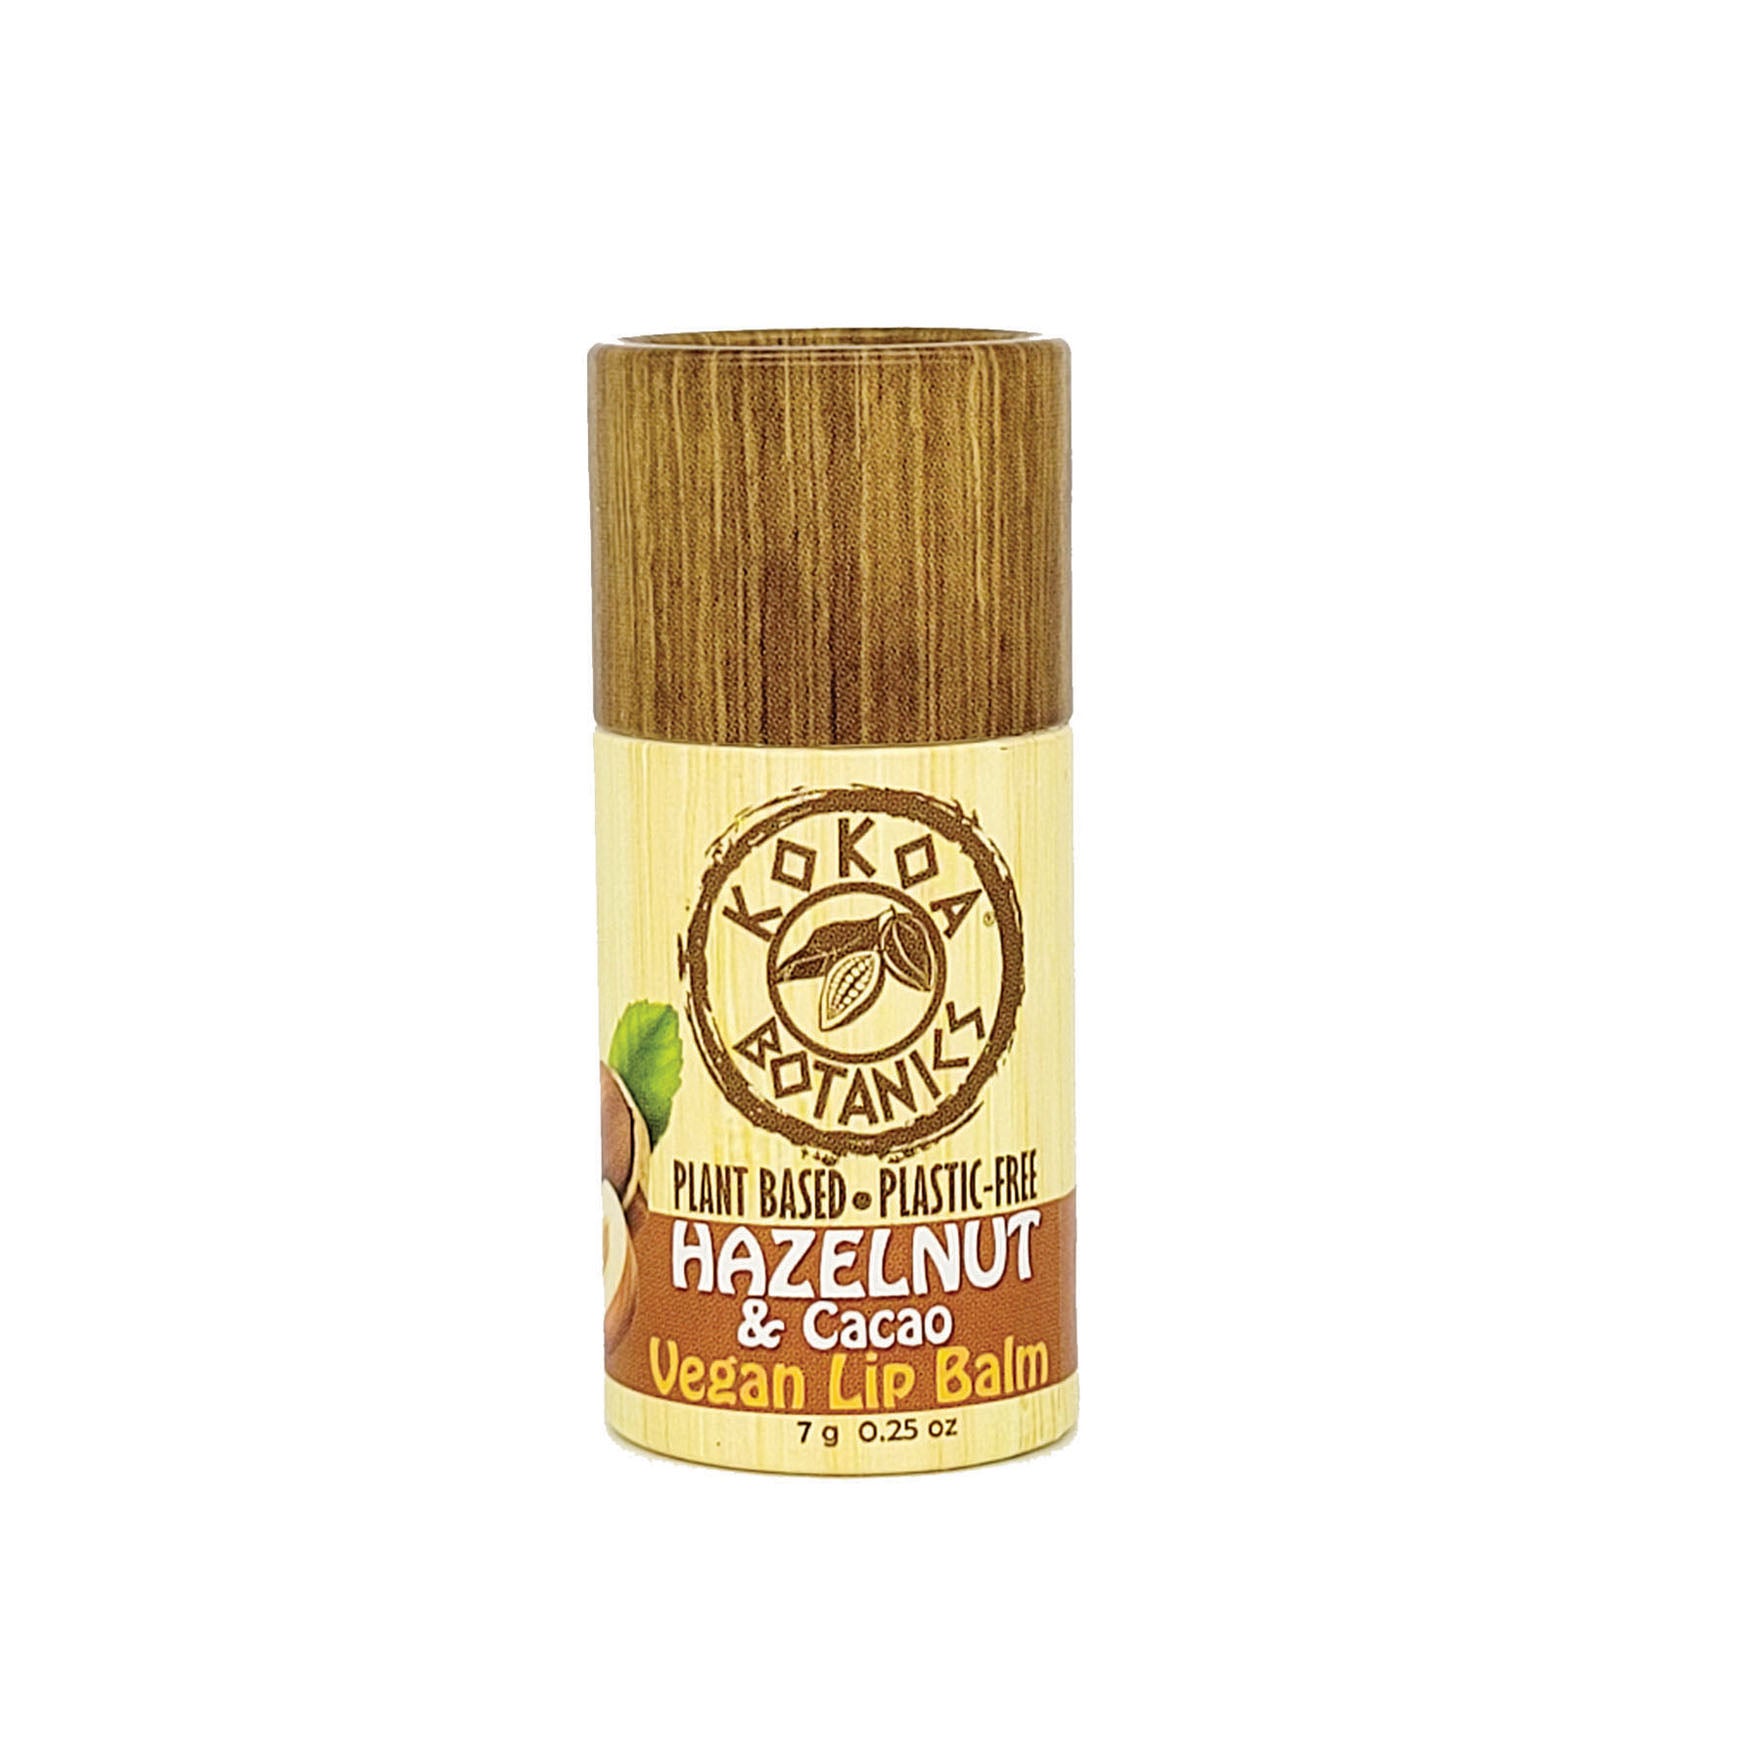 Hazelnut and Cocoa Butter - Natural Lip Balm - Vegan - Plastic Free